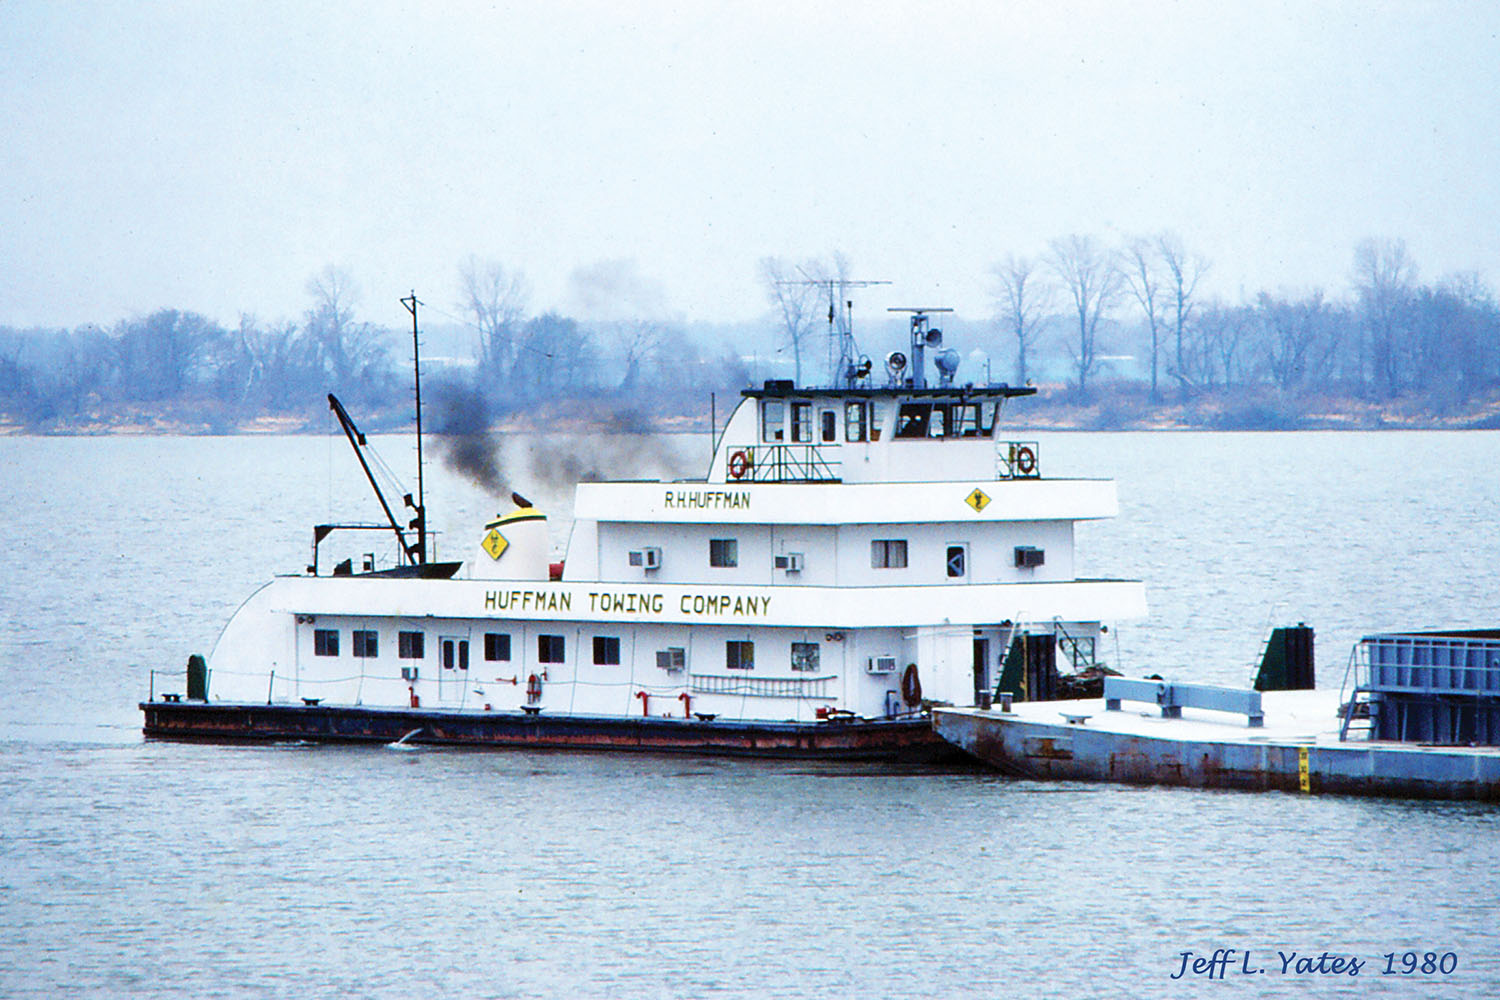 A True Missouri River Towboat Returns Home